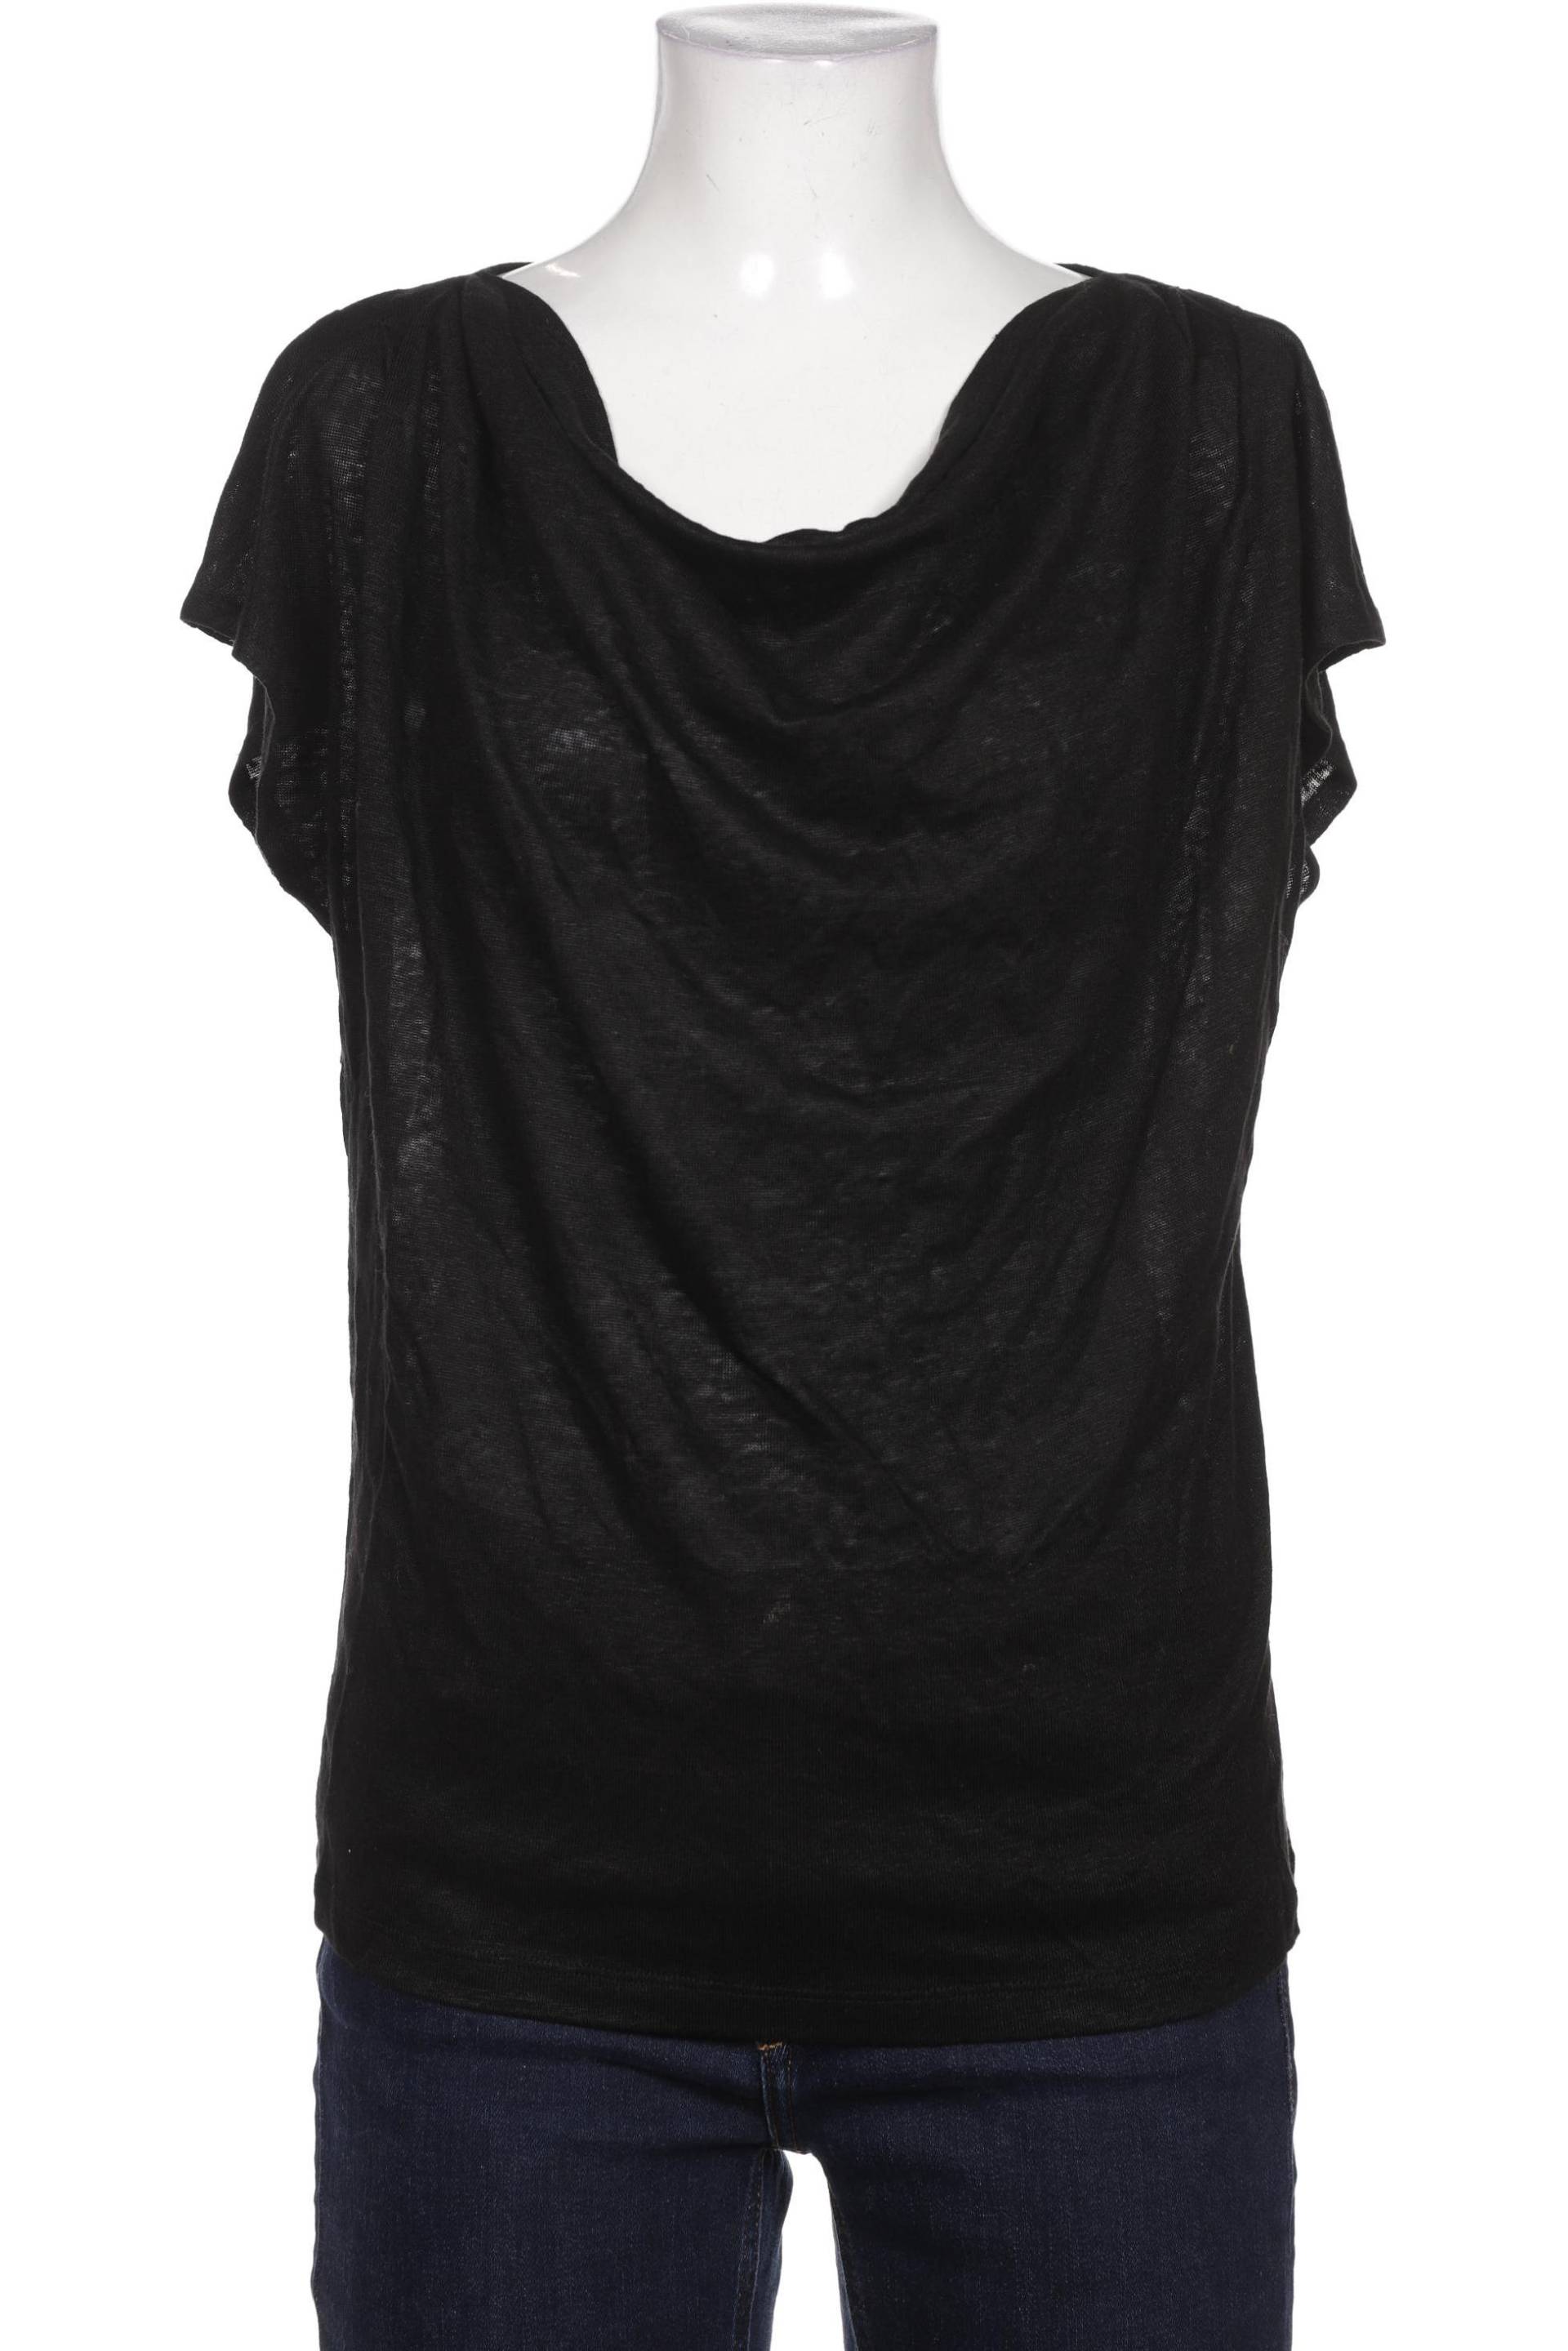 Rosemunde Damen T-Shirt, schwarz von Rosemunde